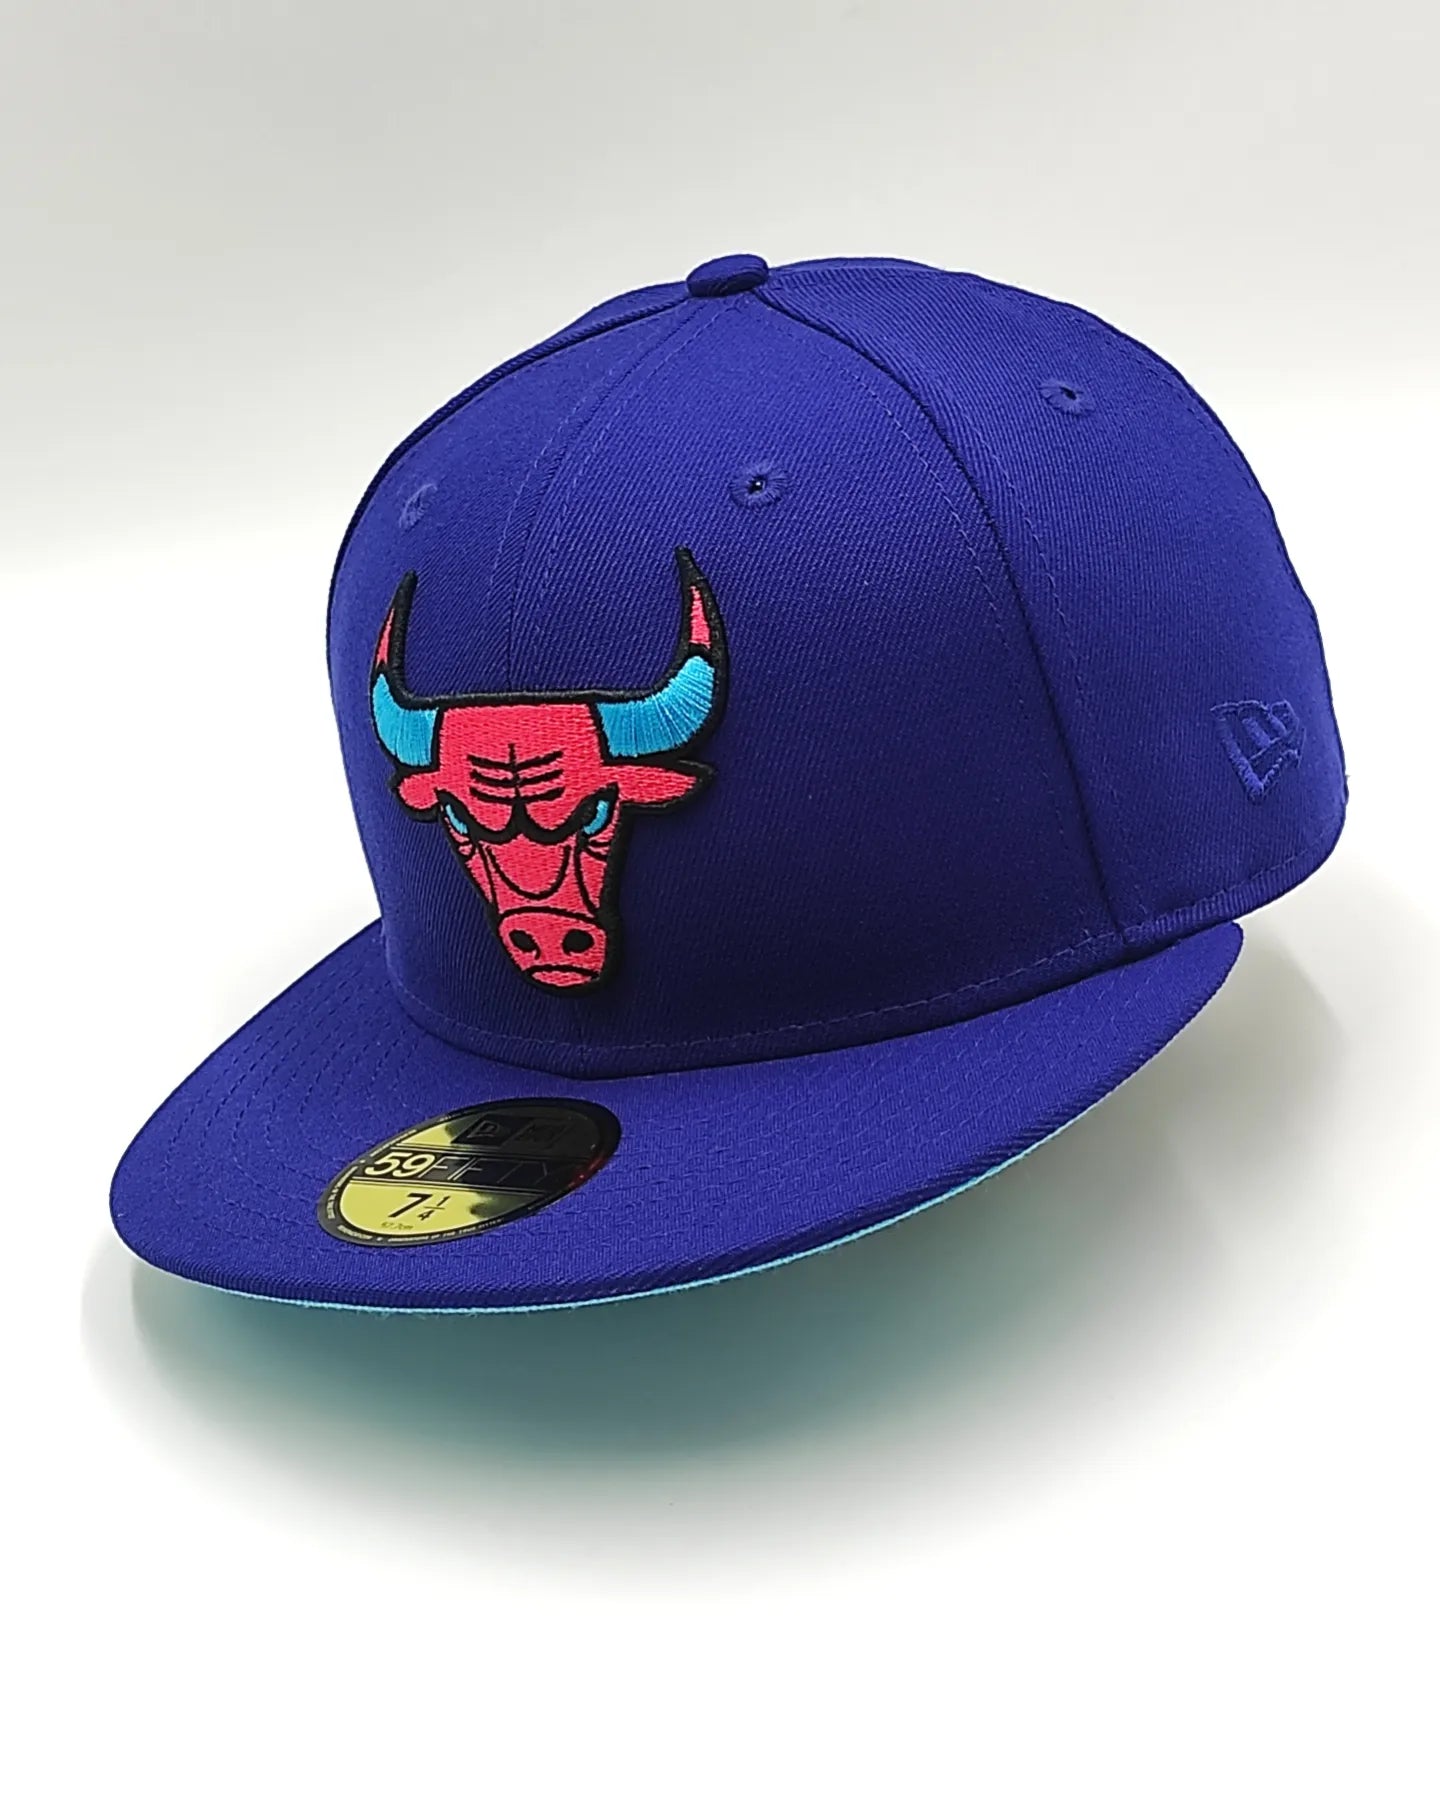 New Era 59fifty Interestelar Helly Chicago bulls hat - royal